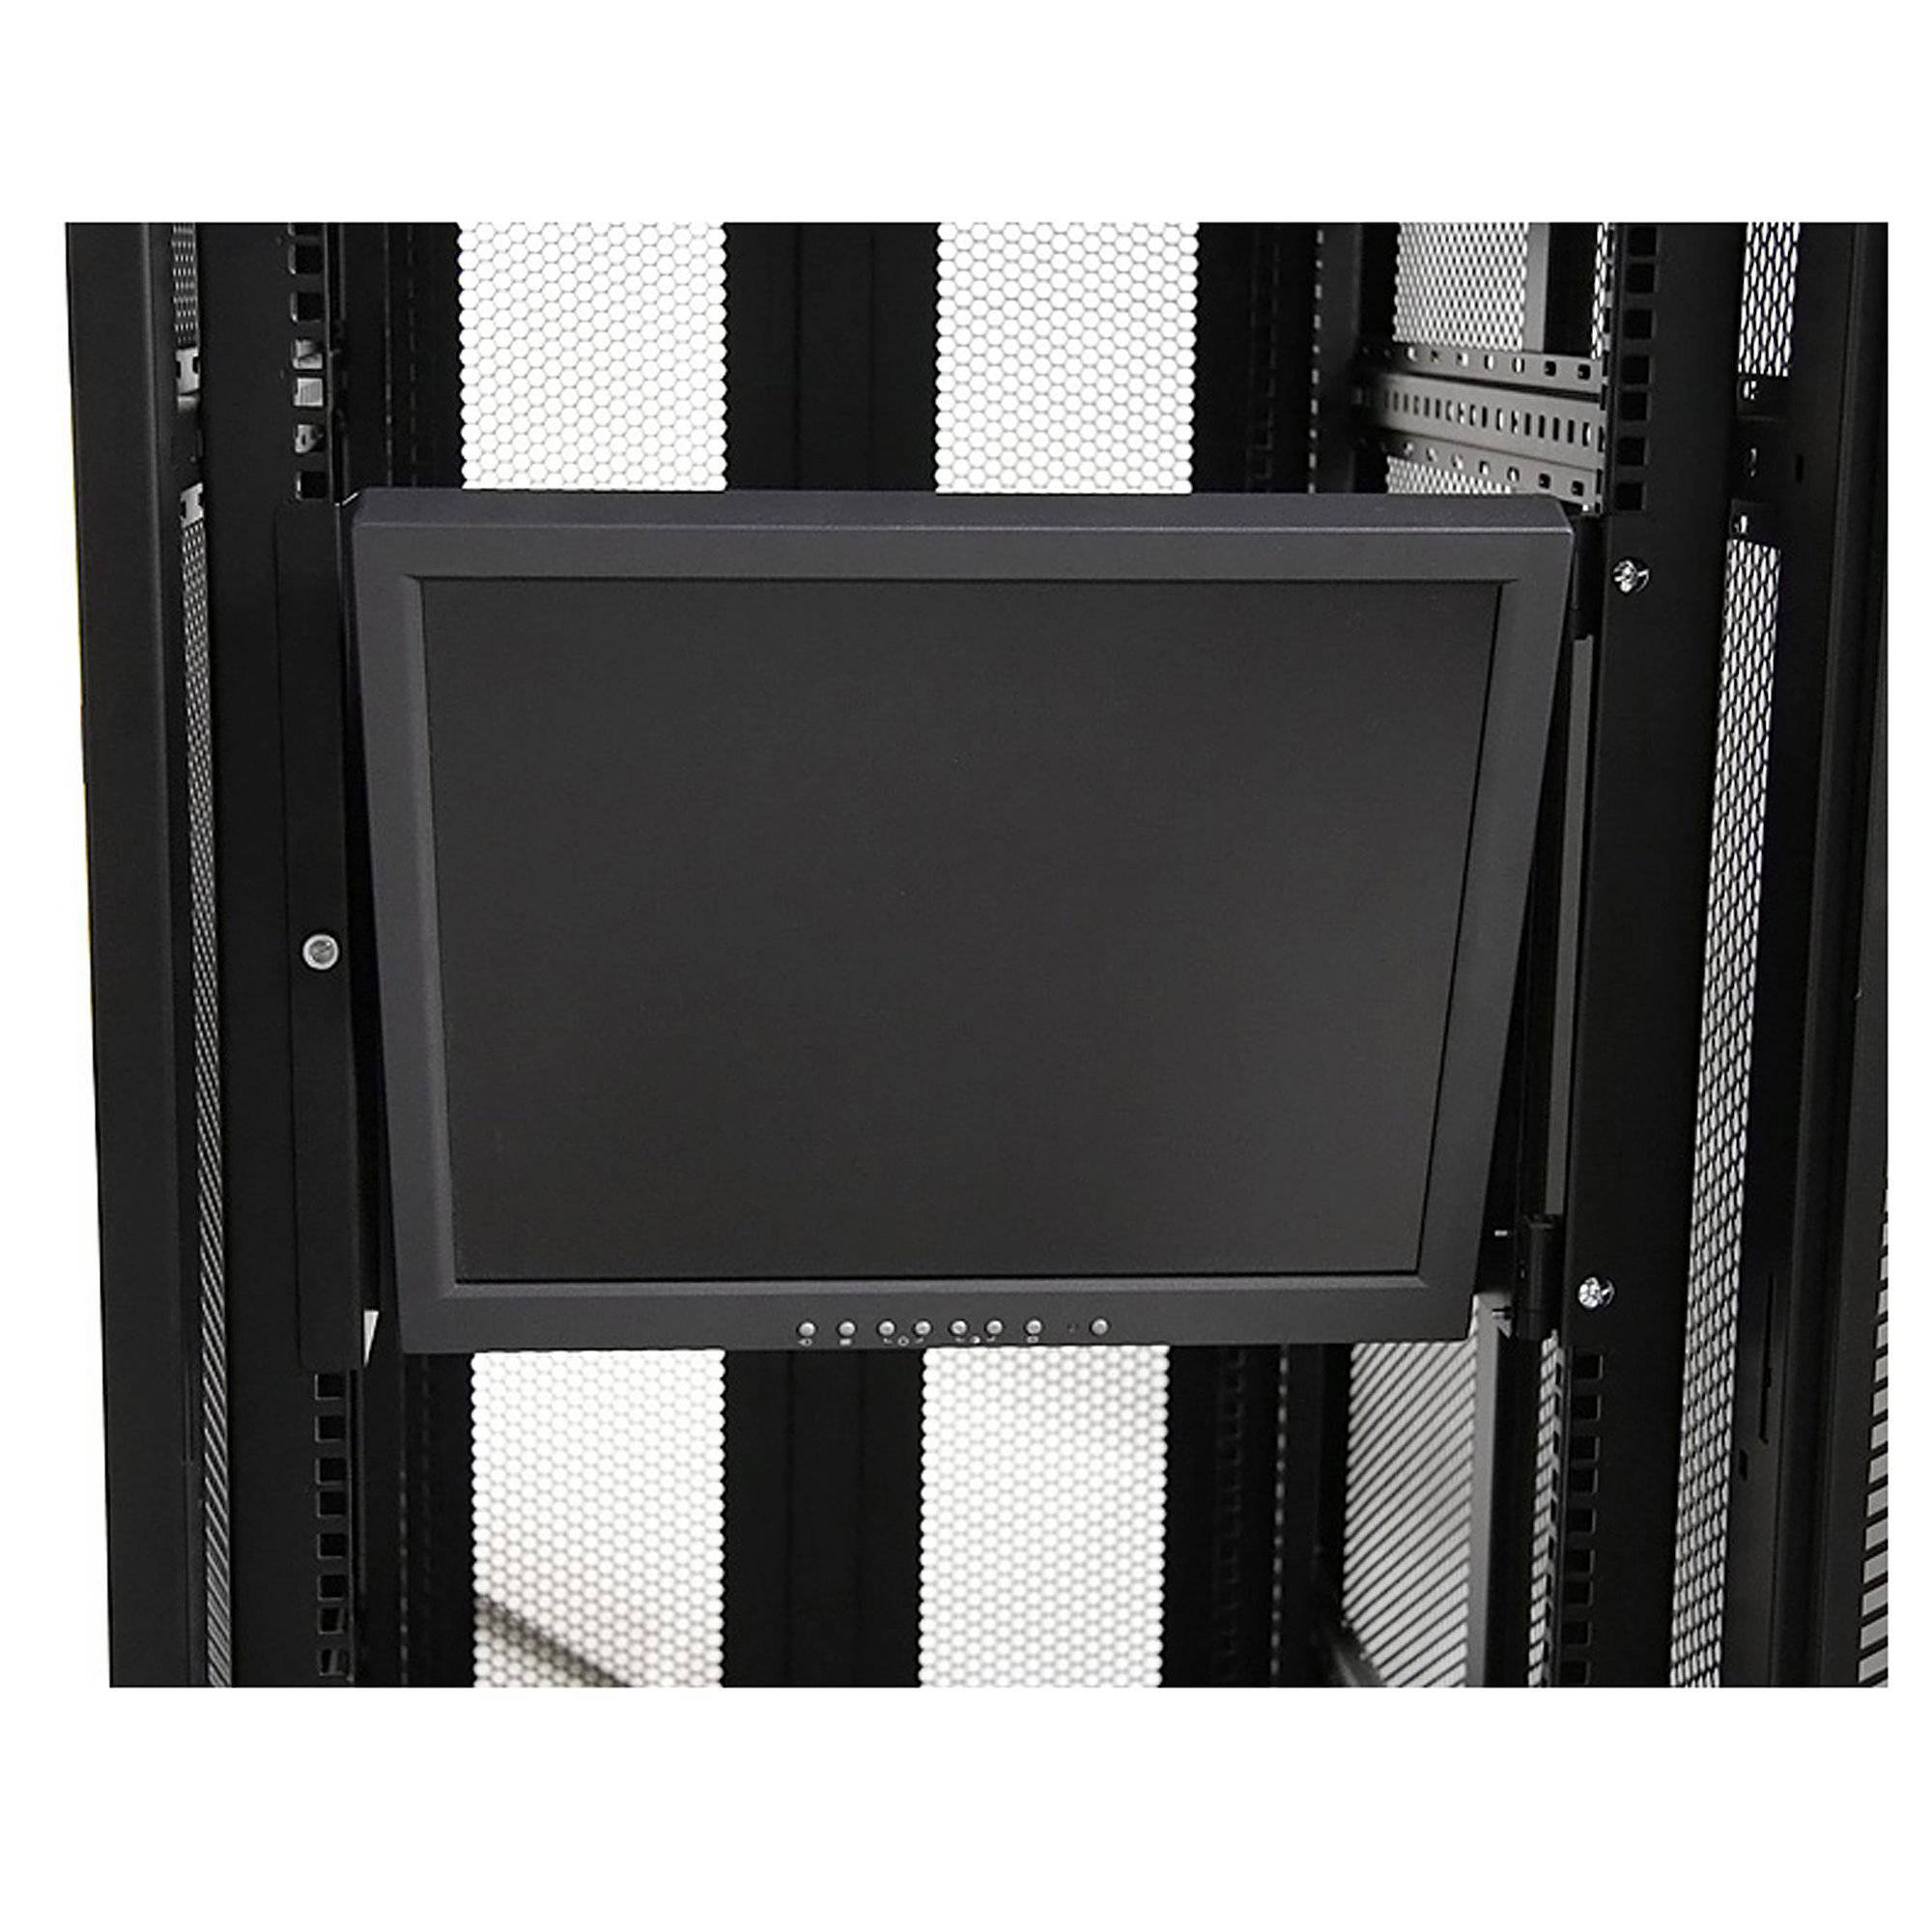 Startech Universal Swivel VESA LCD Mounting Bracket for 19in Rack or Cabinet RKLCDBKT - Buy Singapore